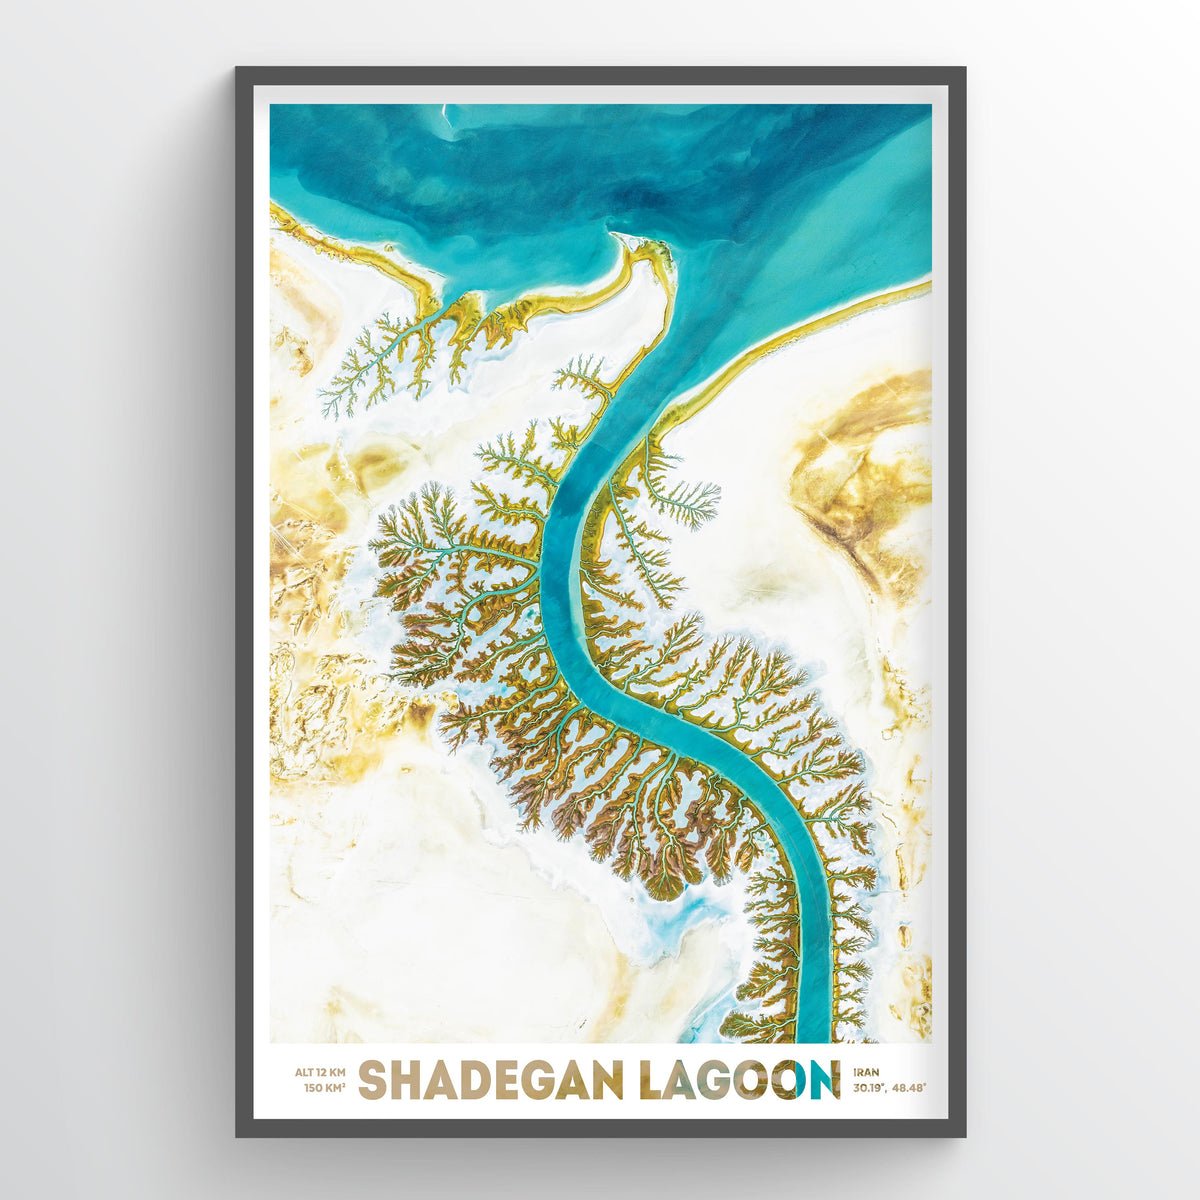 Shadegan Lagoon